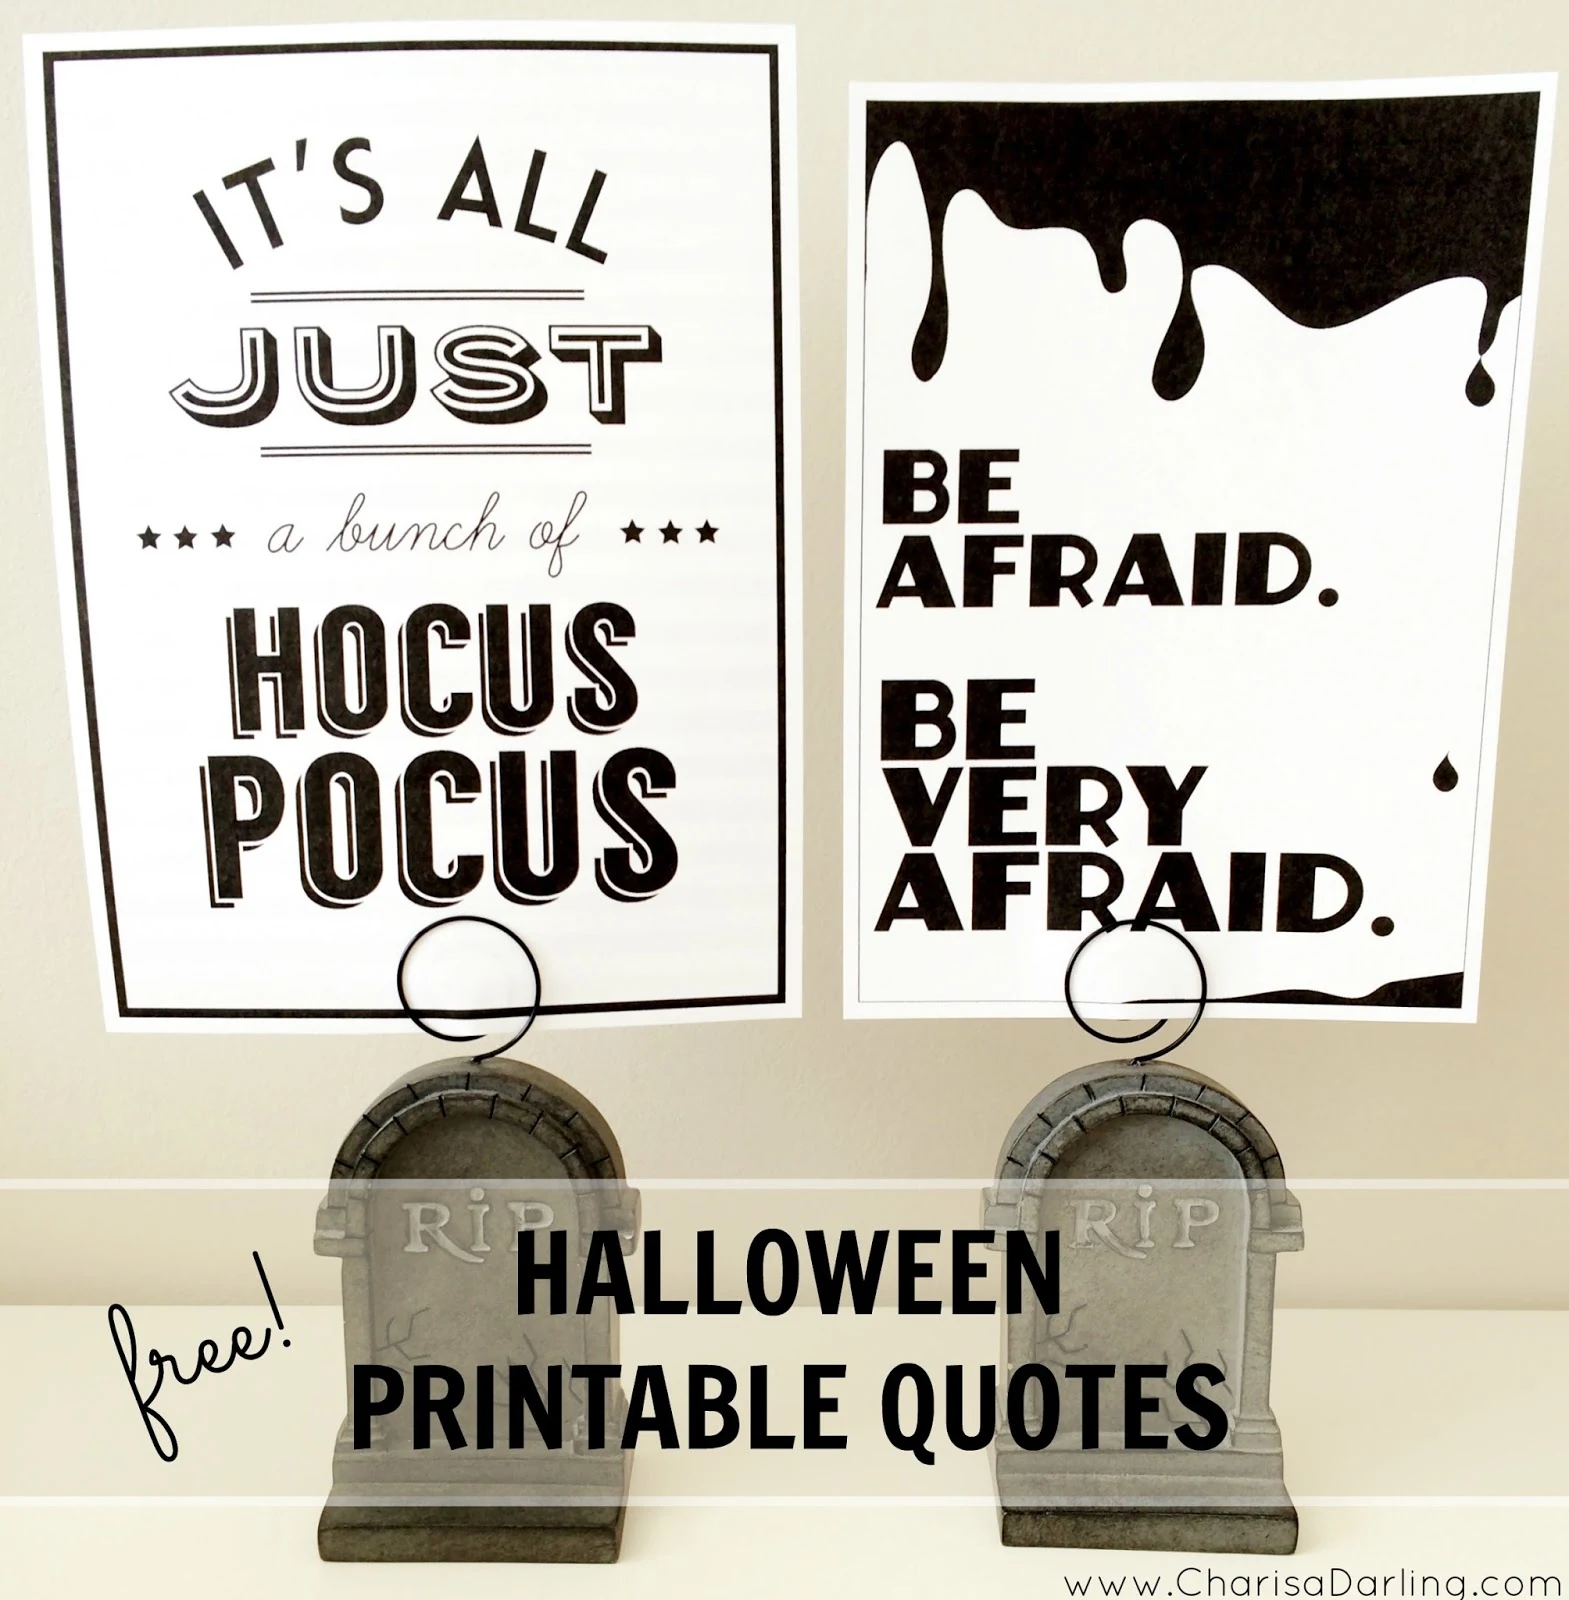 Free Halloween Printable Quotes Charisa Darling